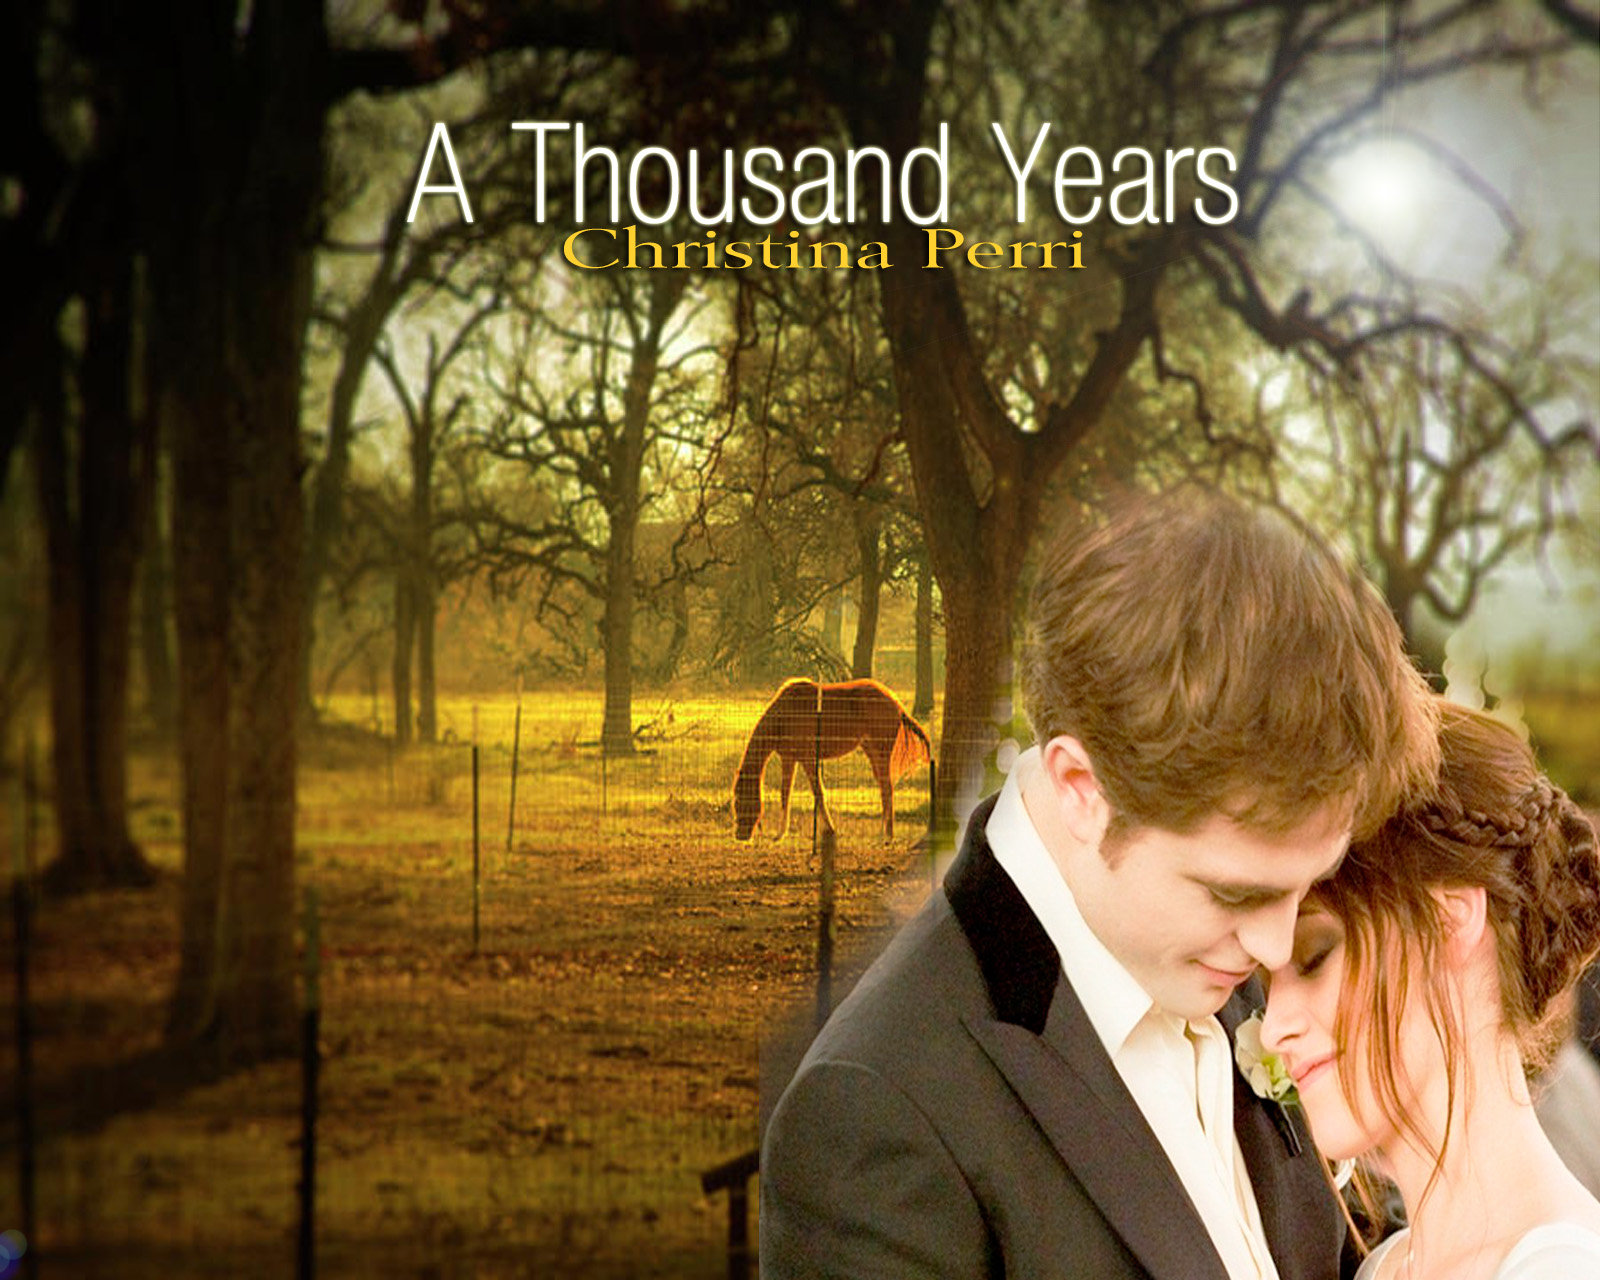 5 thousand years. A Thousand years. Twilight Christina. A Thousand years Christina Perri. A Thousand years album.